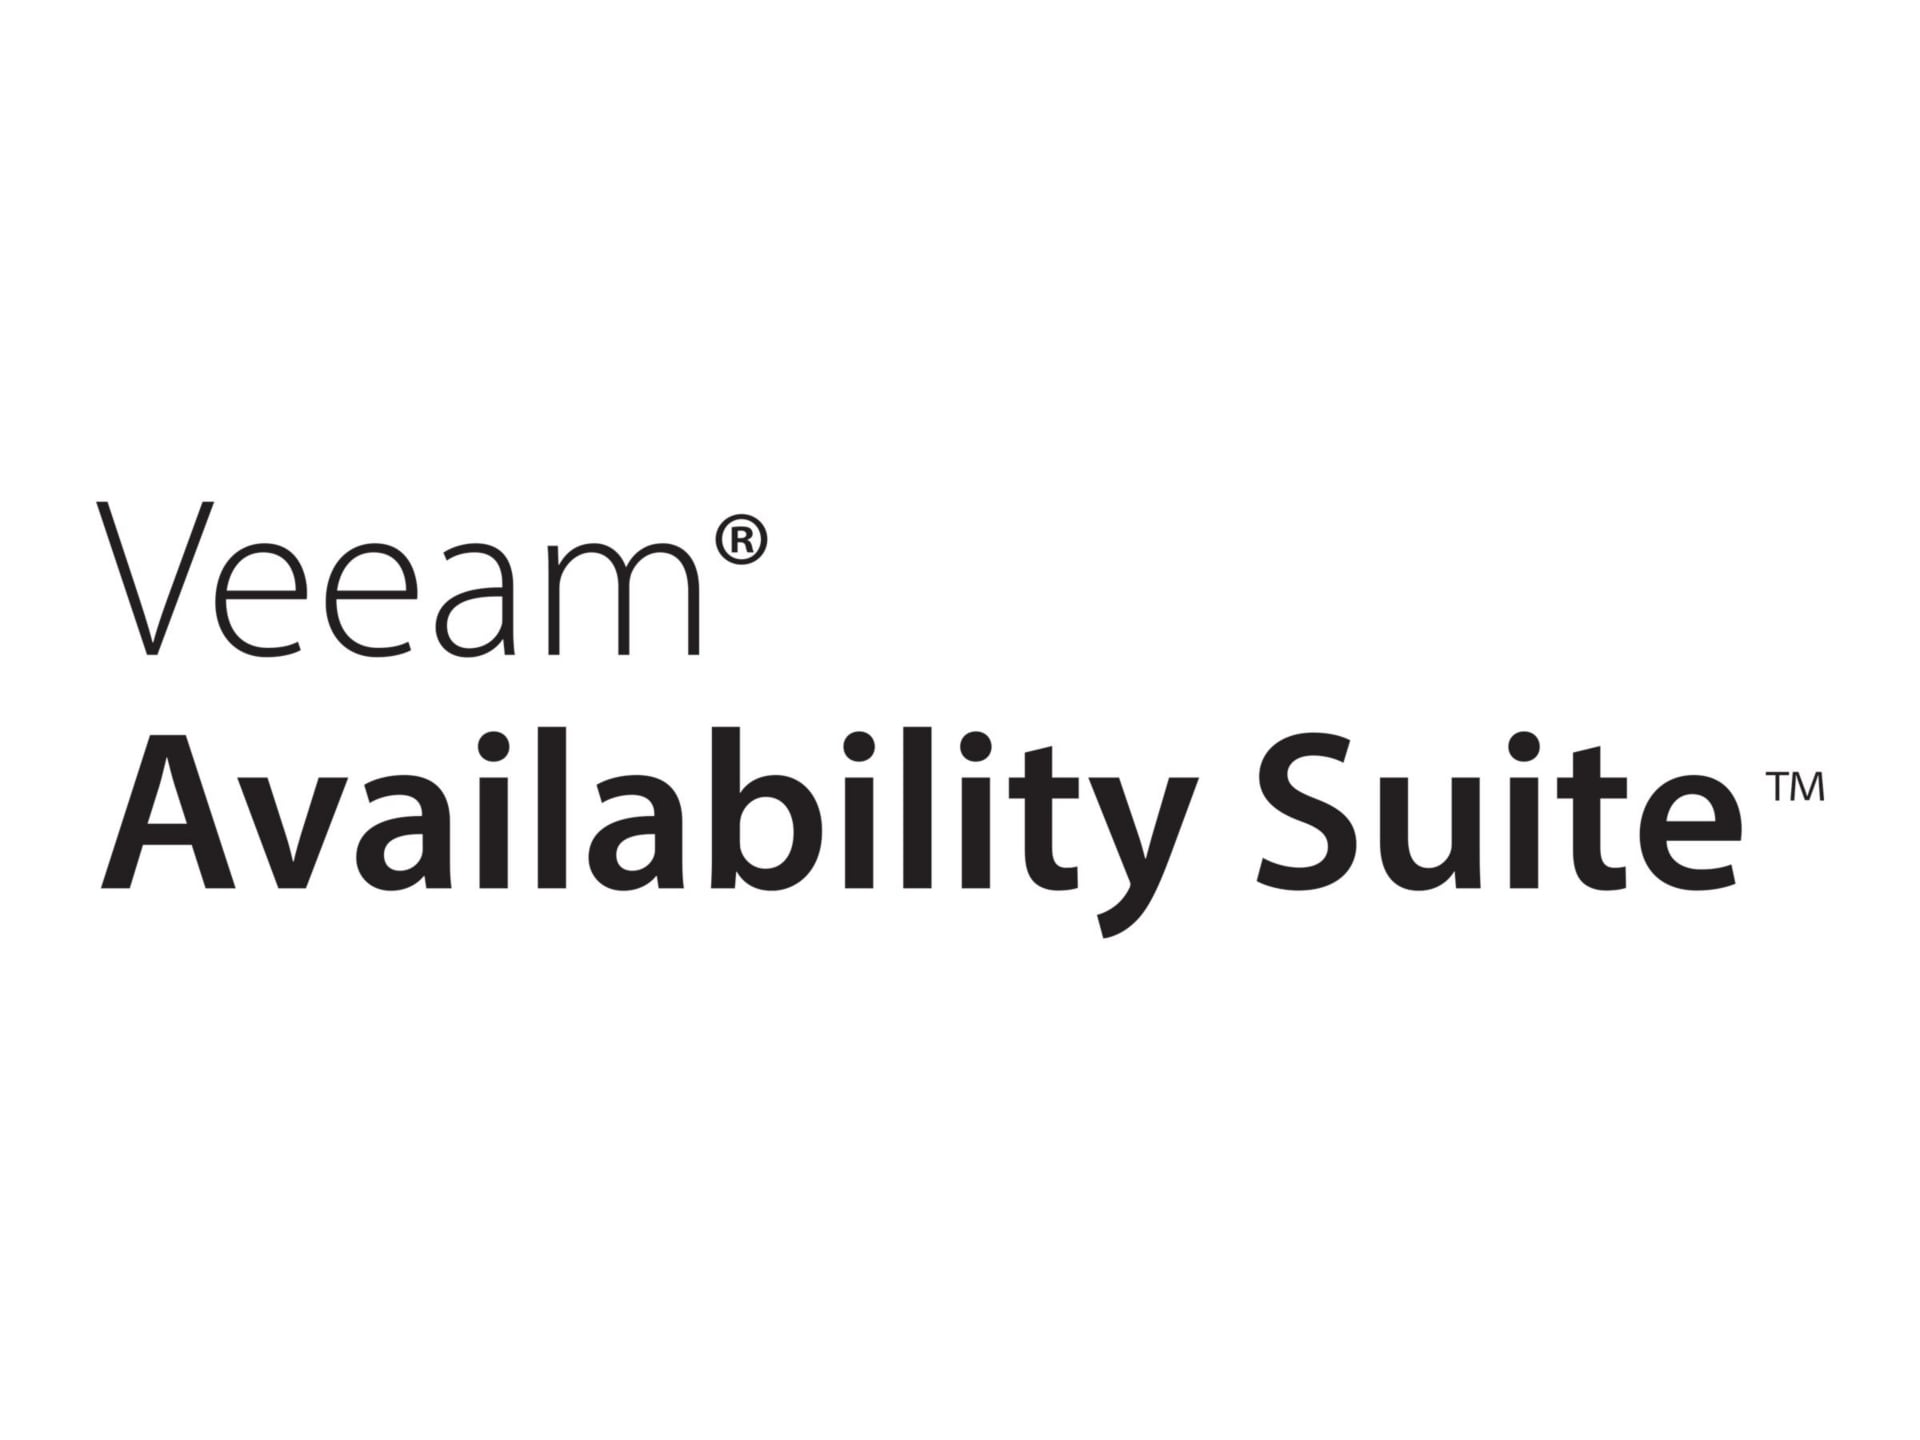 Veeam Availability Suite Universal License - Upfront Billing License (renew